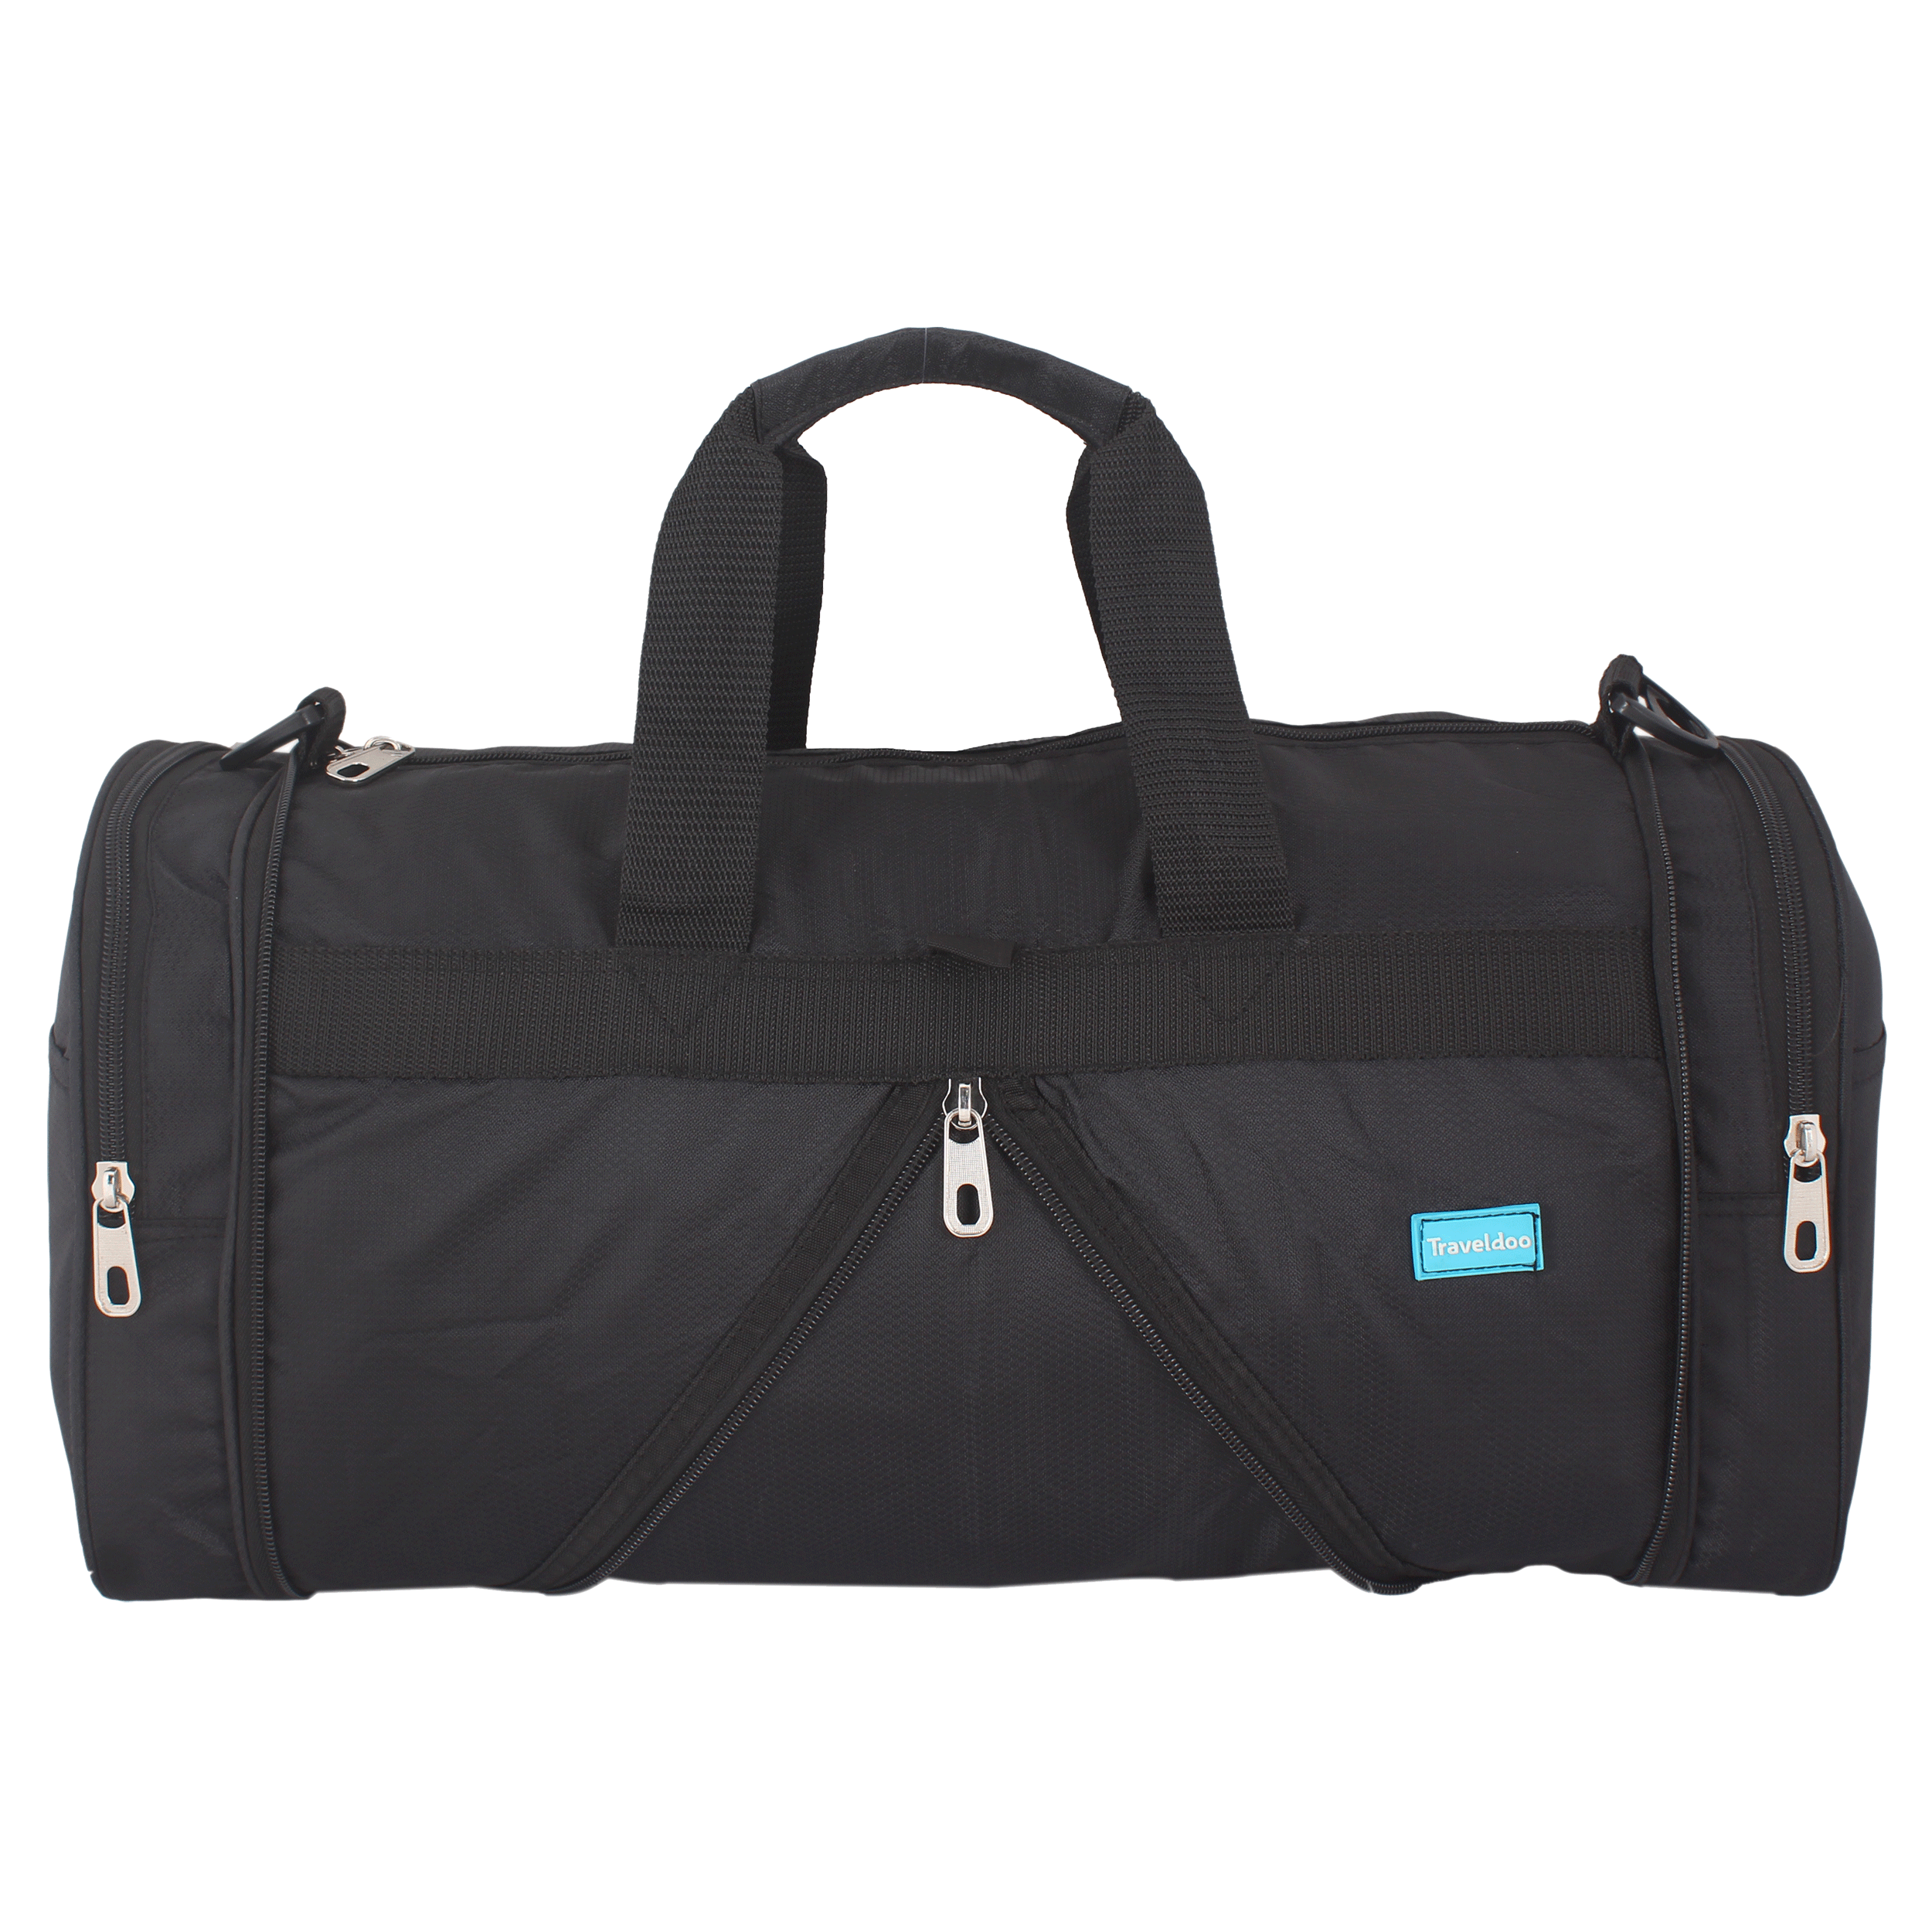 Traveldoo 18 inch Square Folding Duffle Bag (DBS01001, Black)